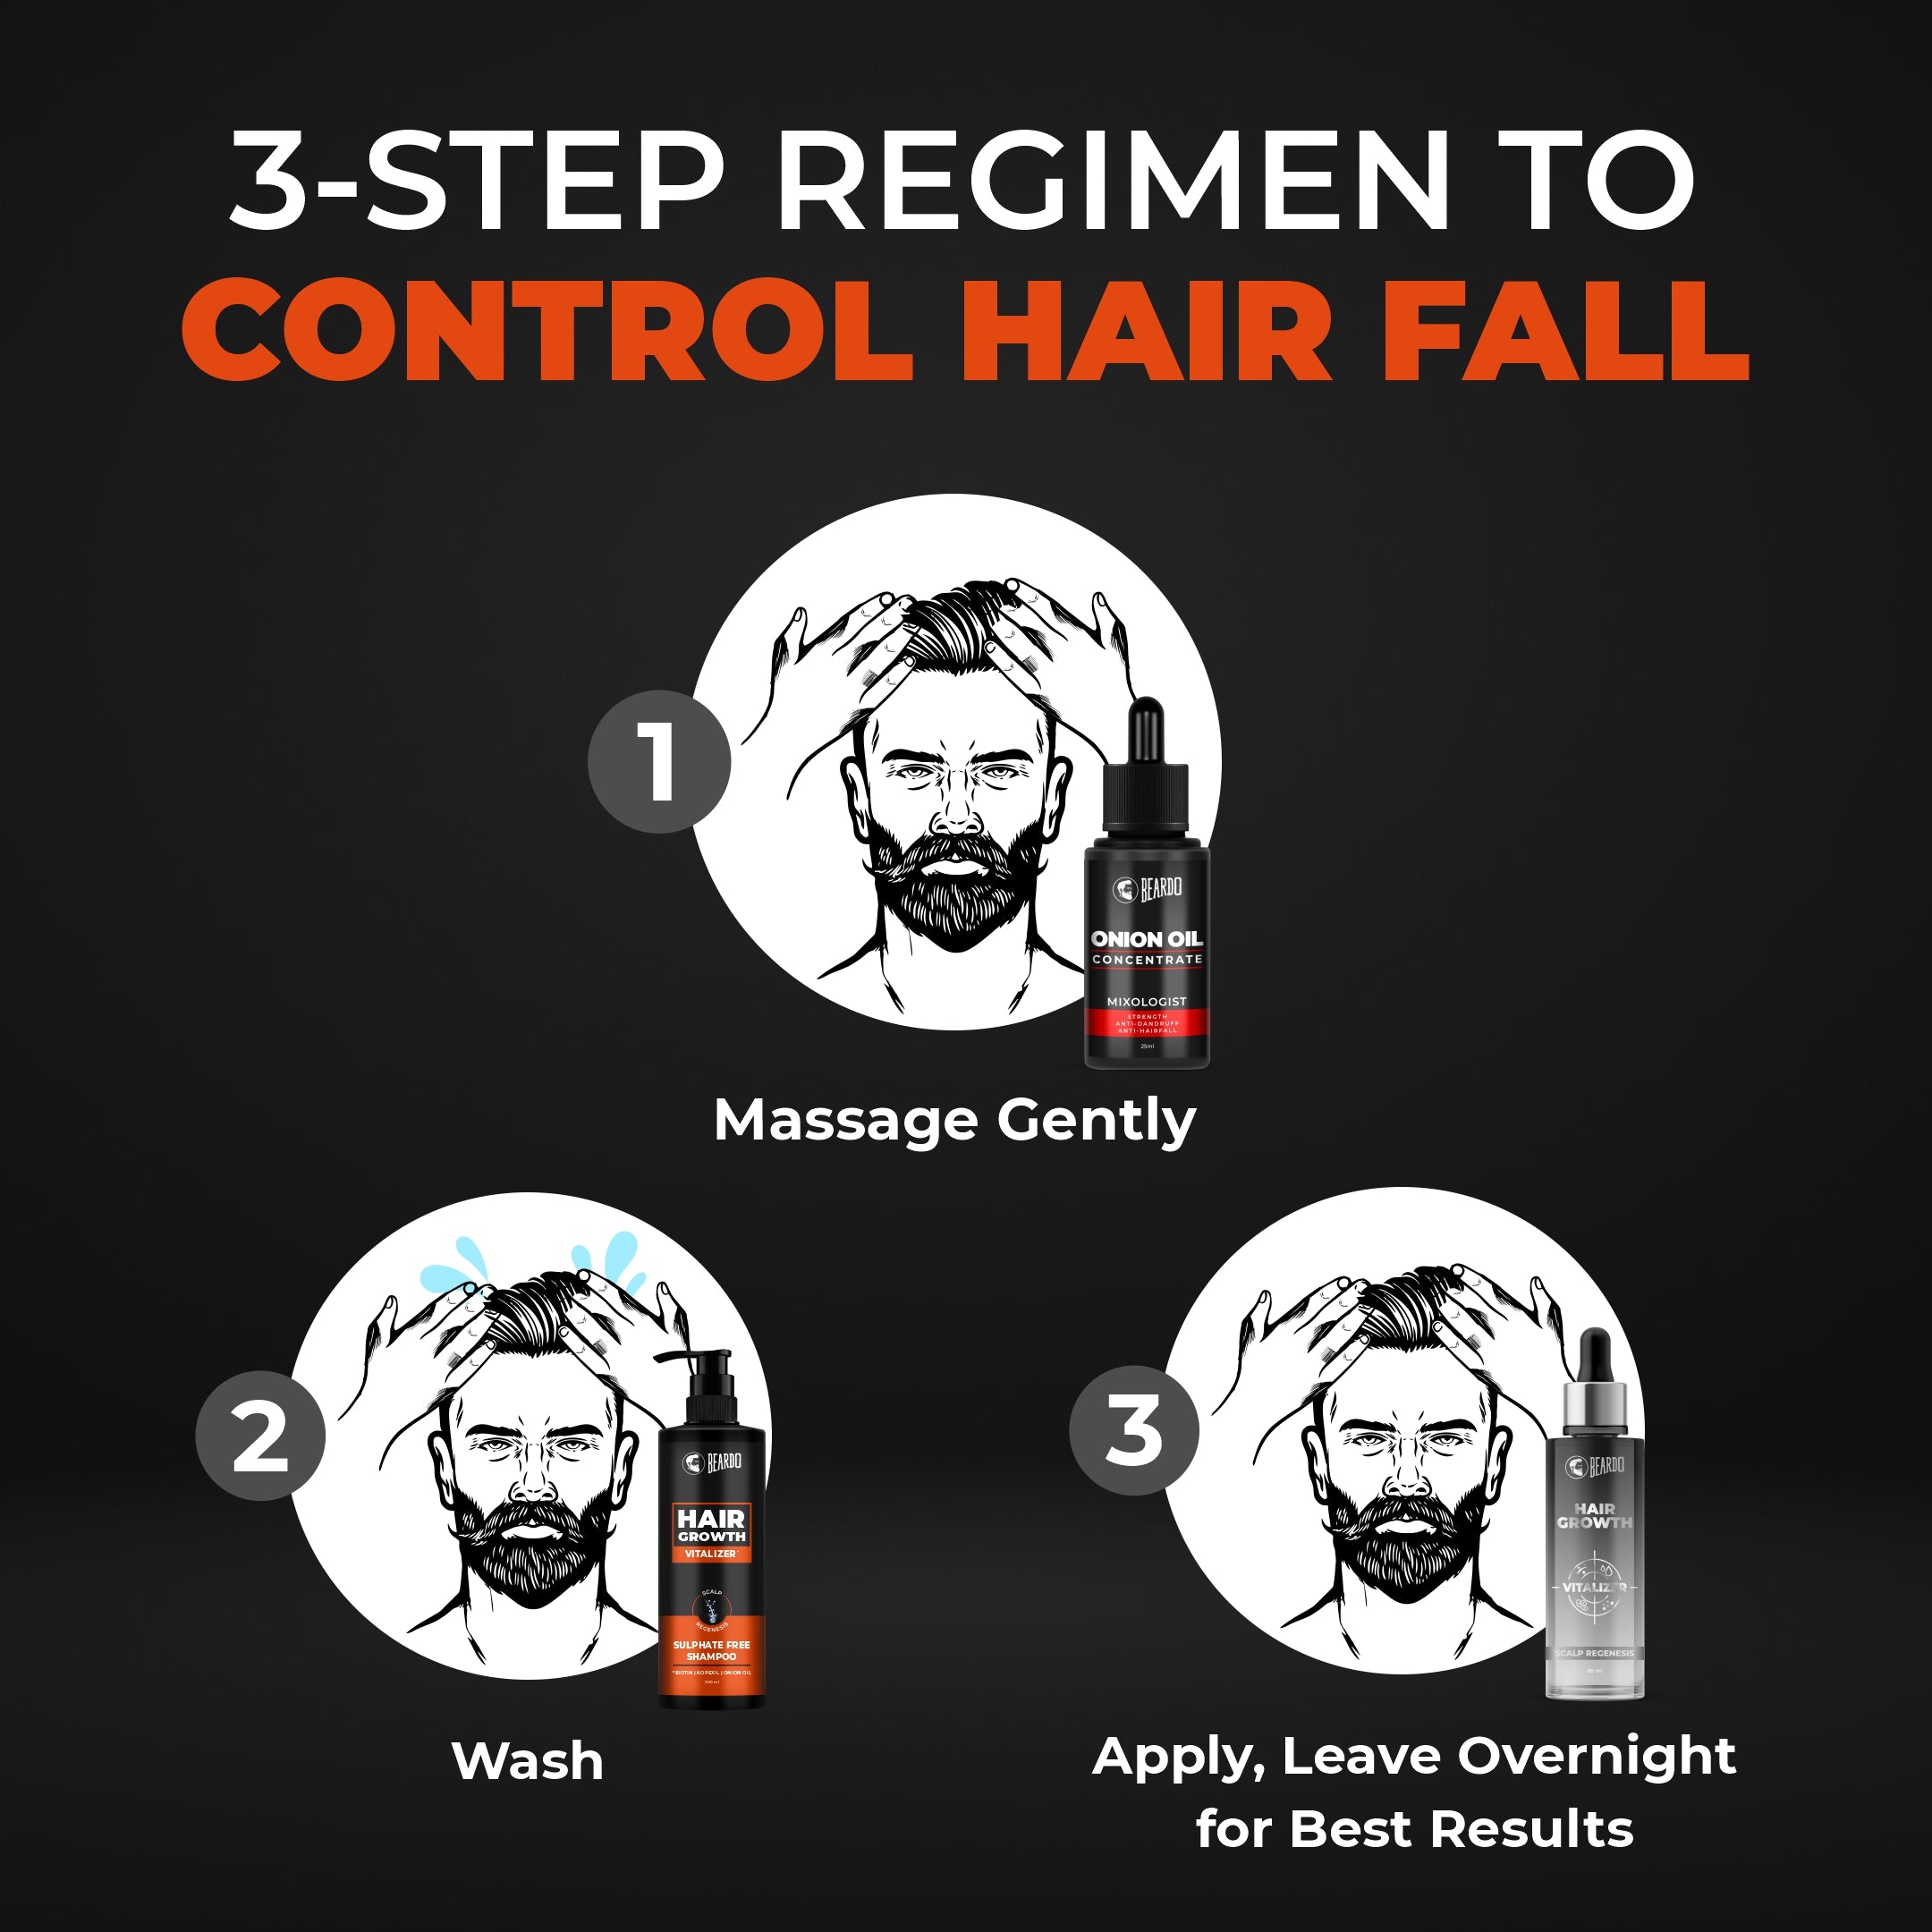 Beardo Hair Fall Control Shampoo